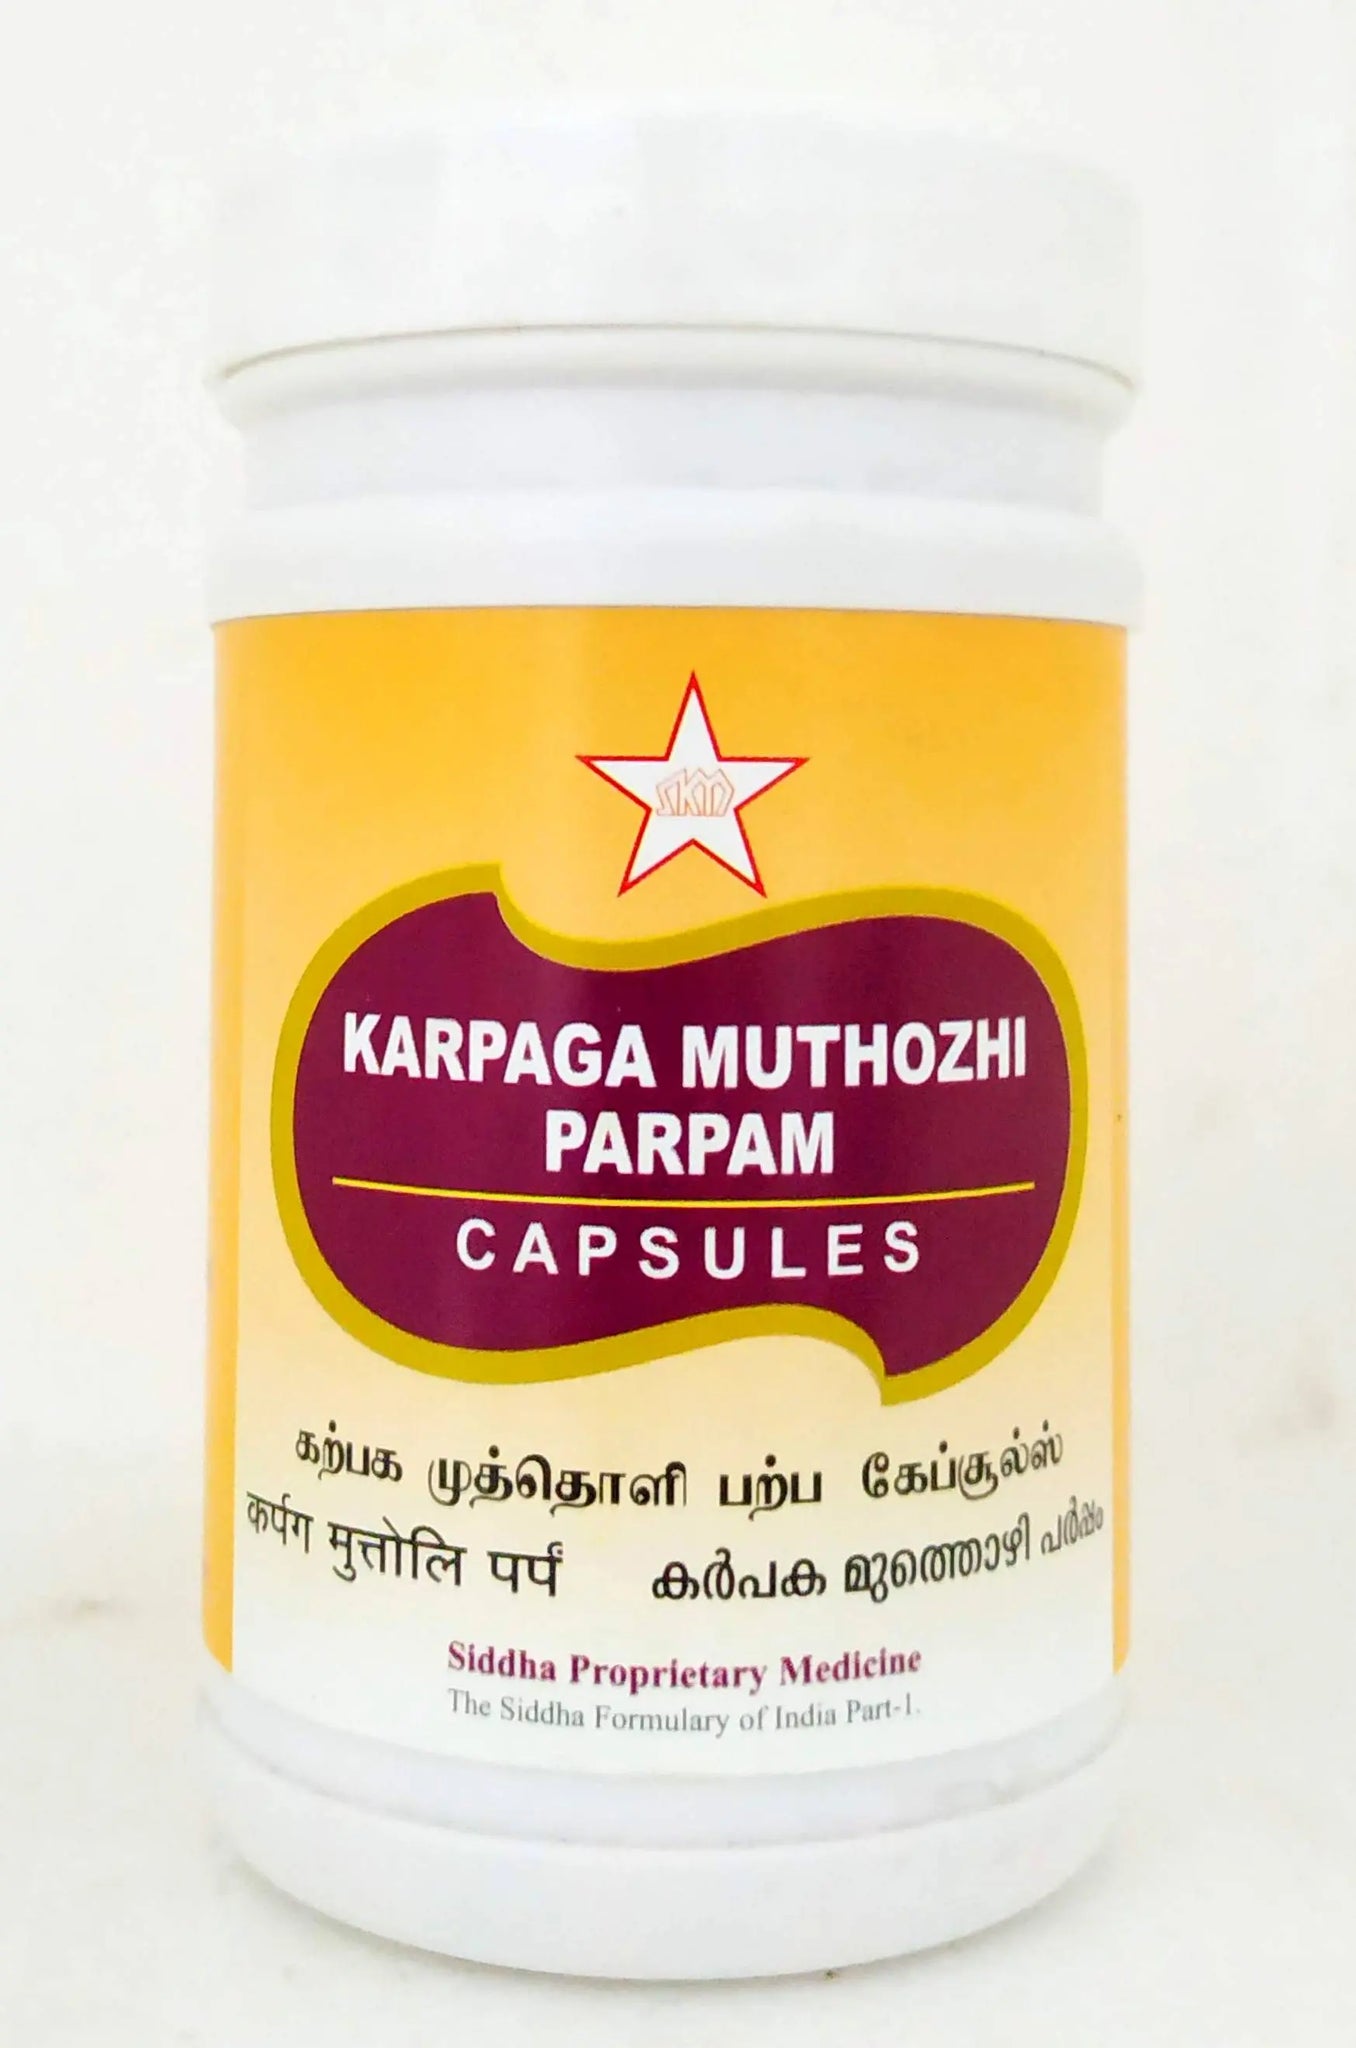 Karpagamuthozhi capsules - 100capsules SKM